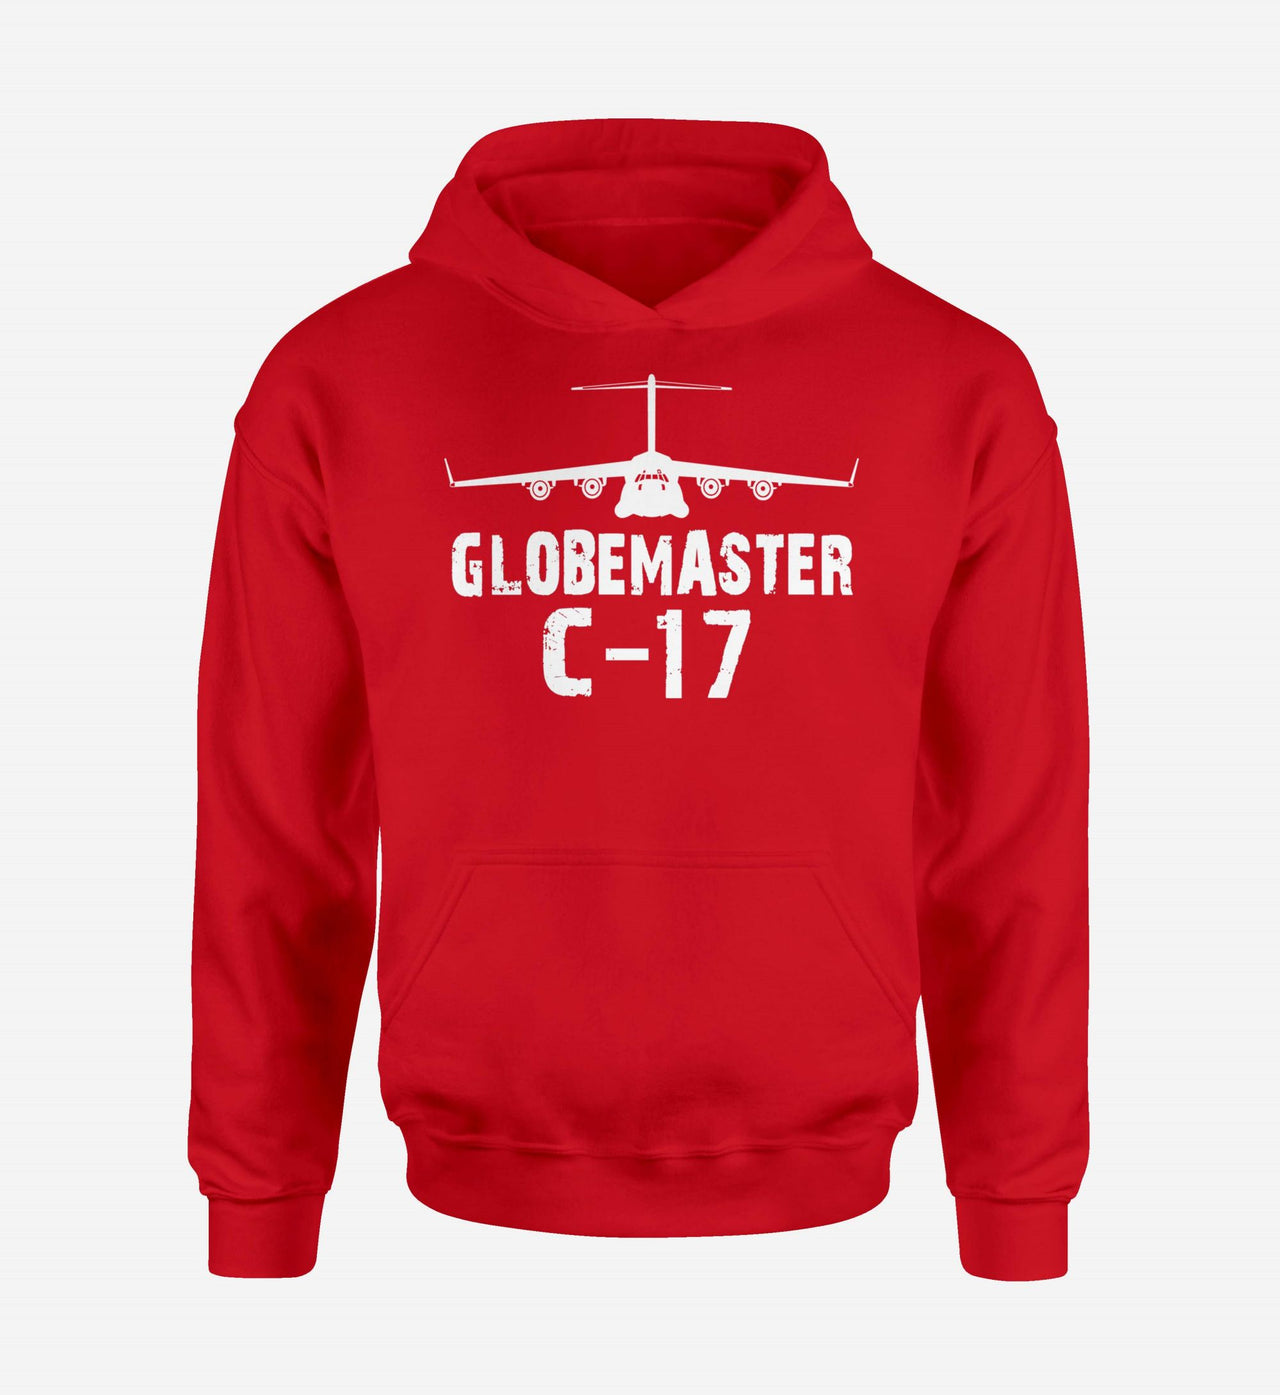 GlobeMaster C-17 & Plane Designed Hoodies